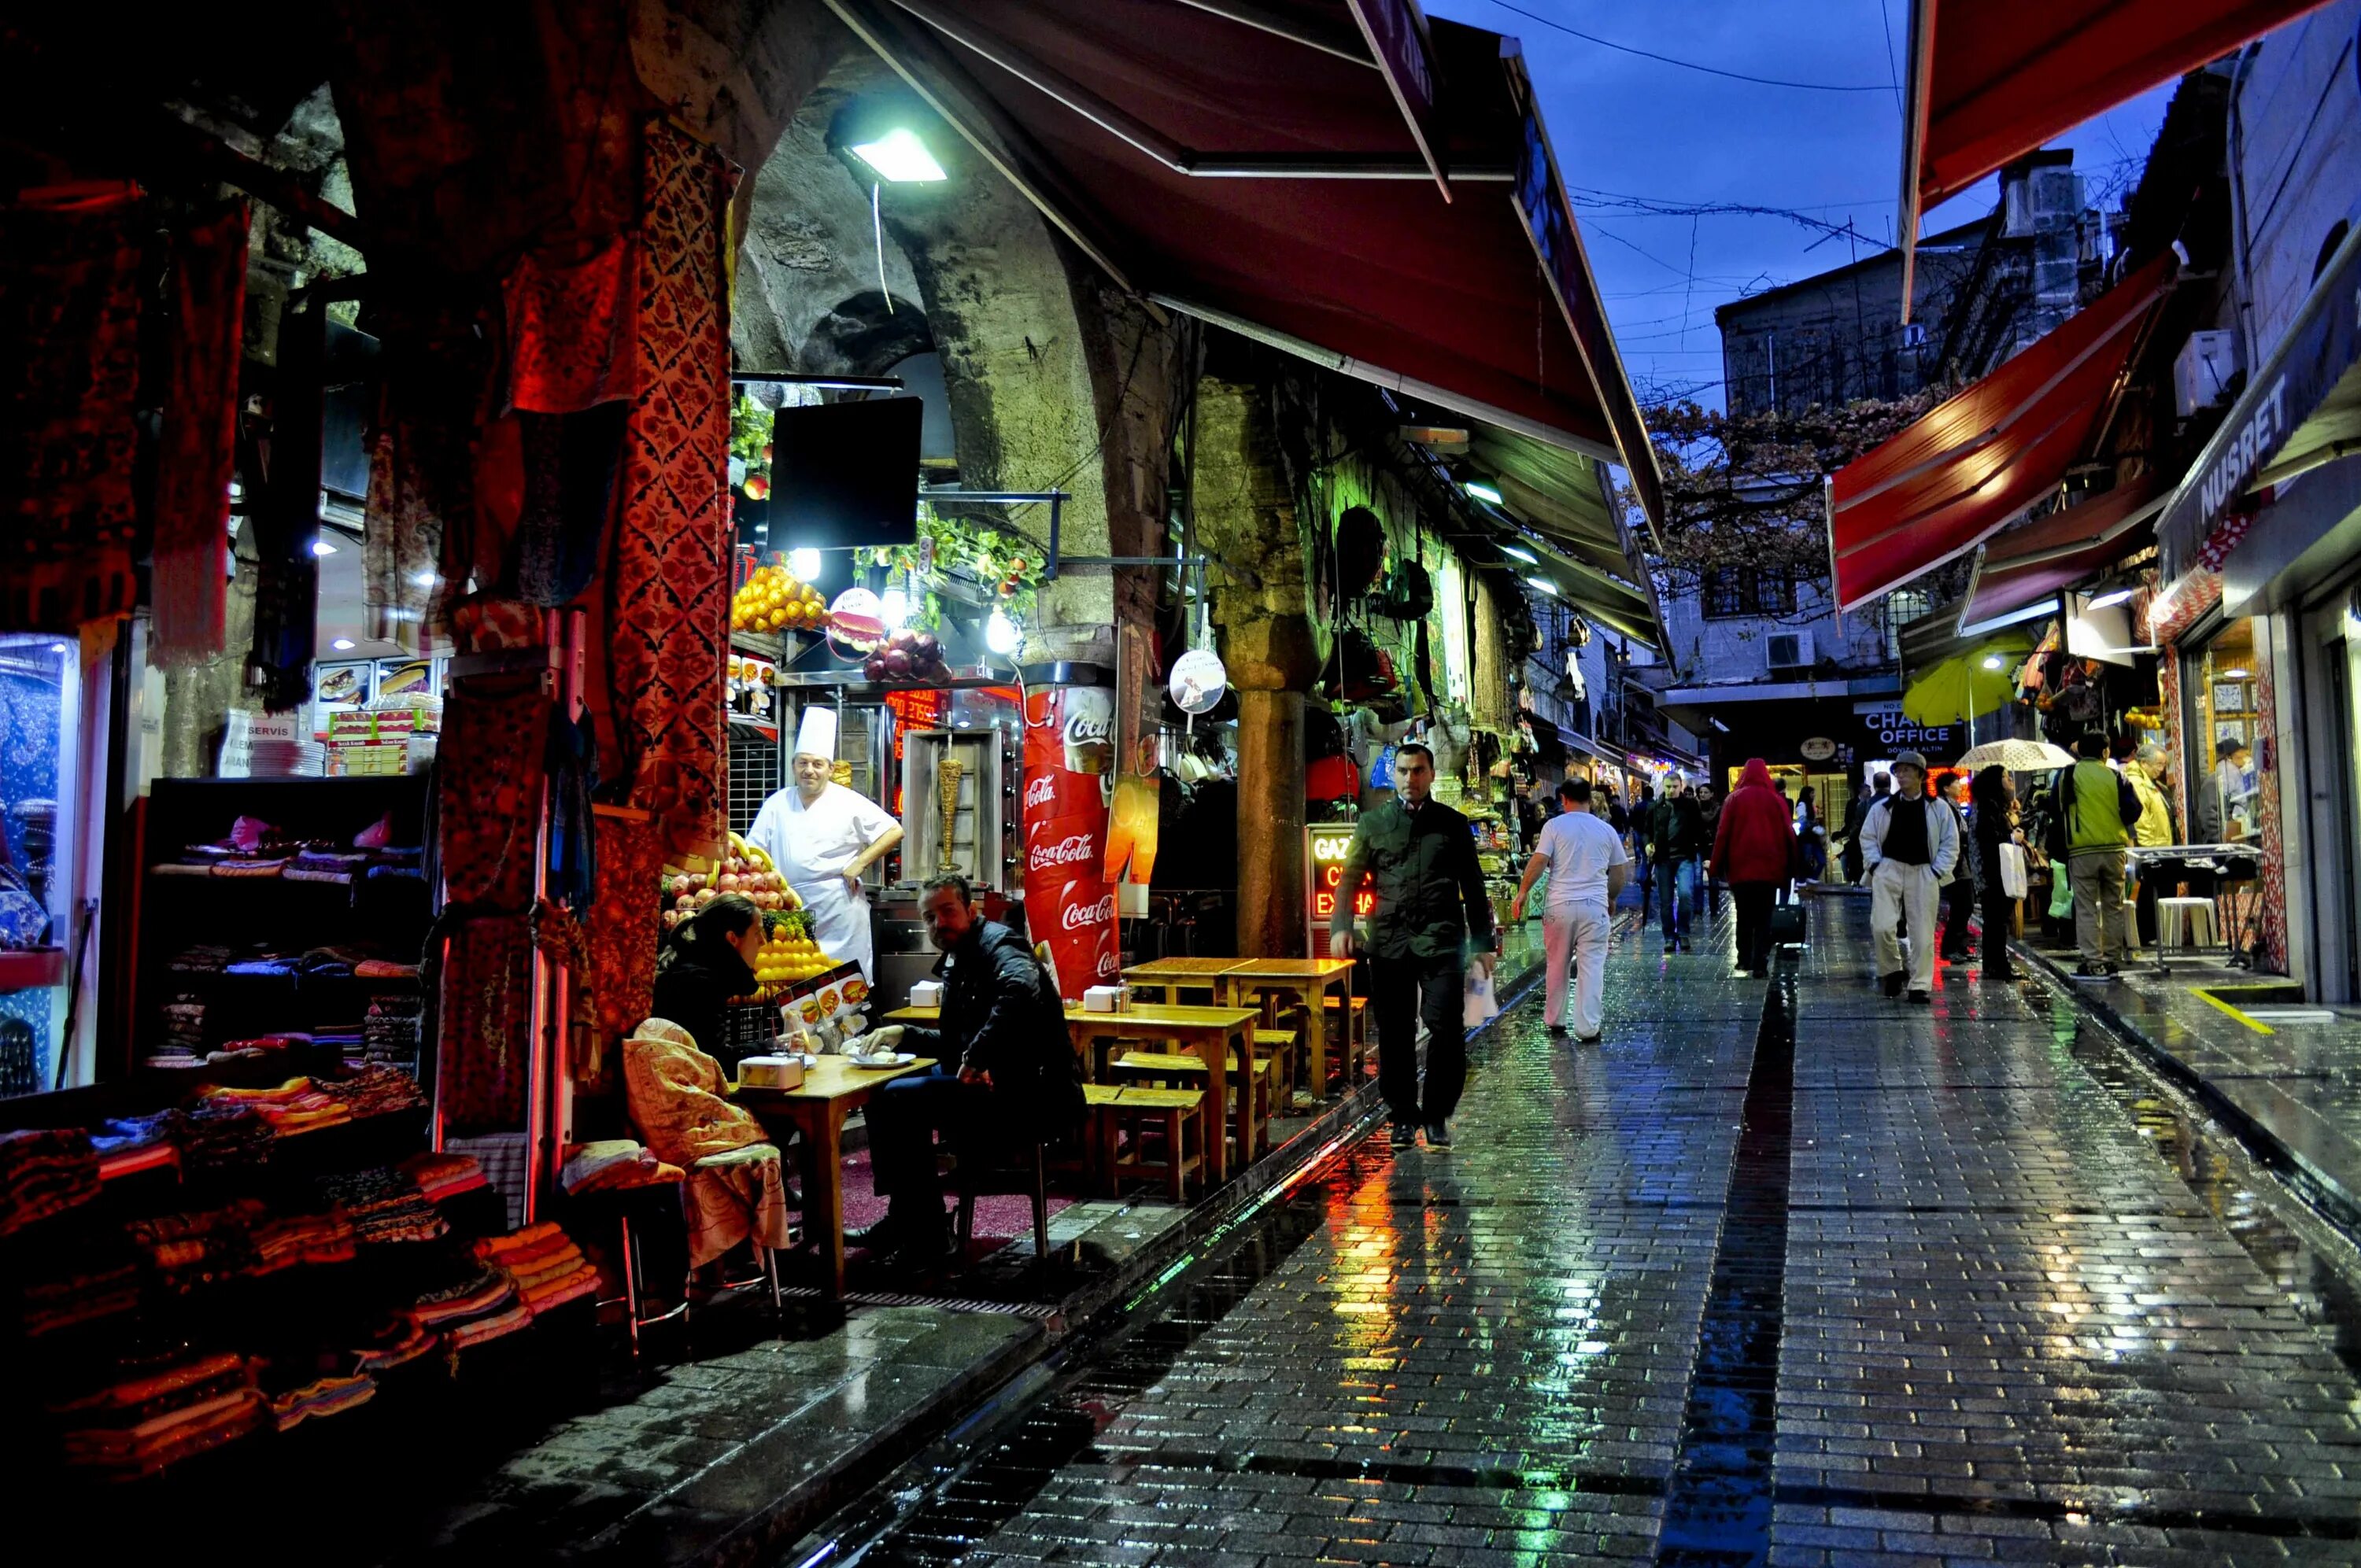 Стамбул старый город султанахмет. Улица Истикляль, Стамбул, Турция. Турция улица Истикляль. Турецкие улочки Стамбула. Торговая улица Стамбула Истикляль.